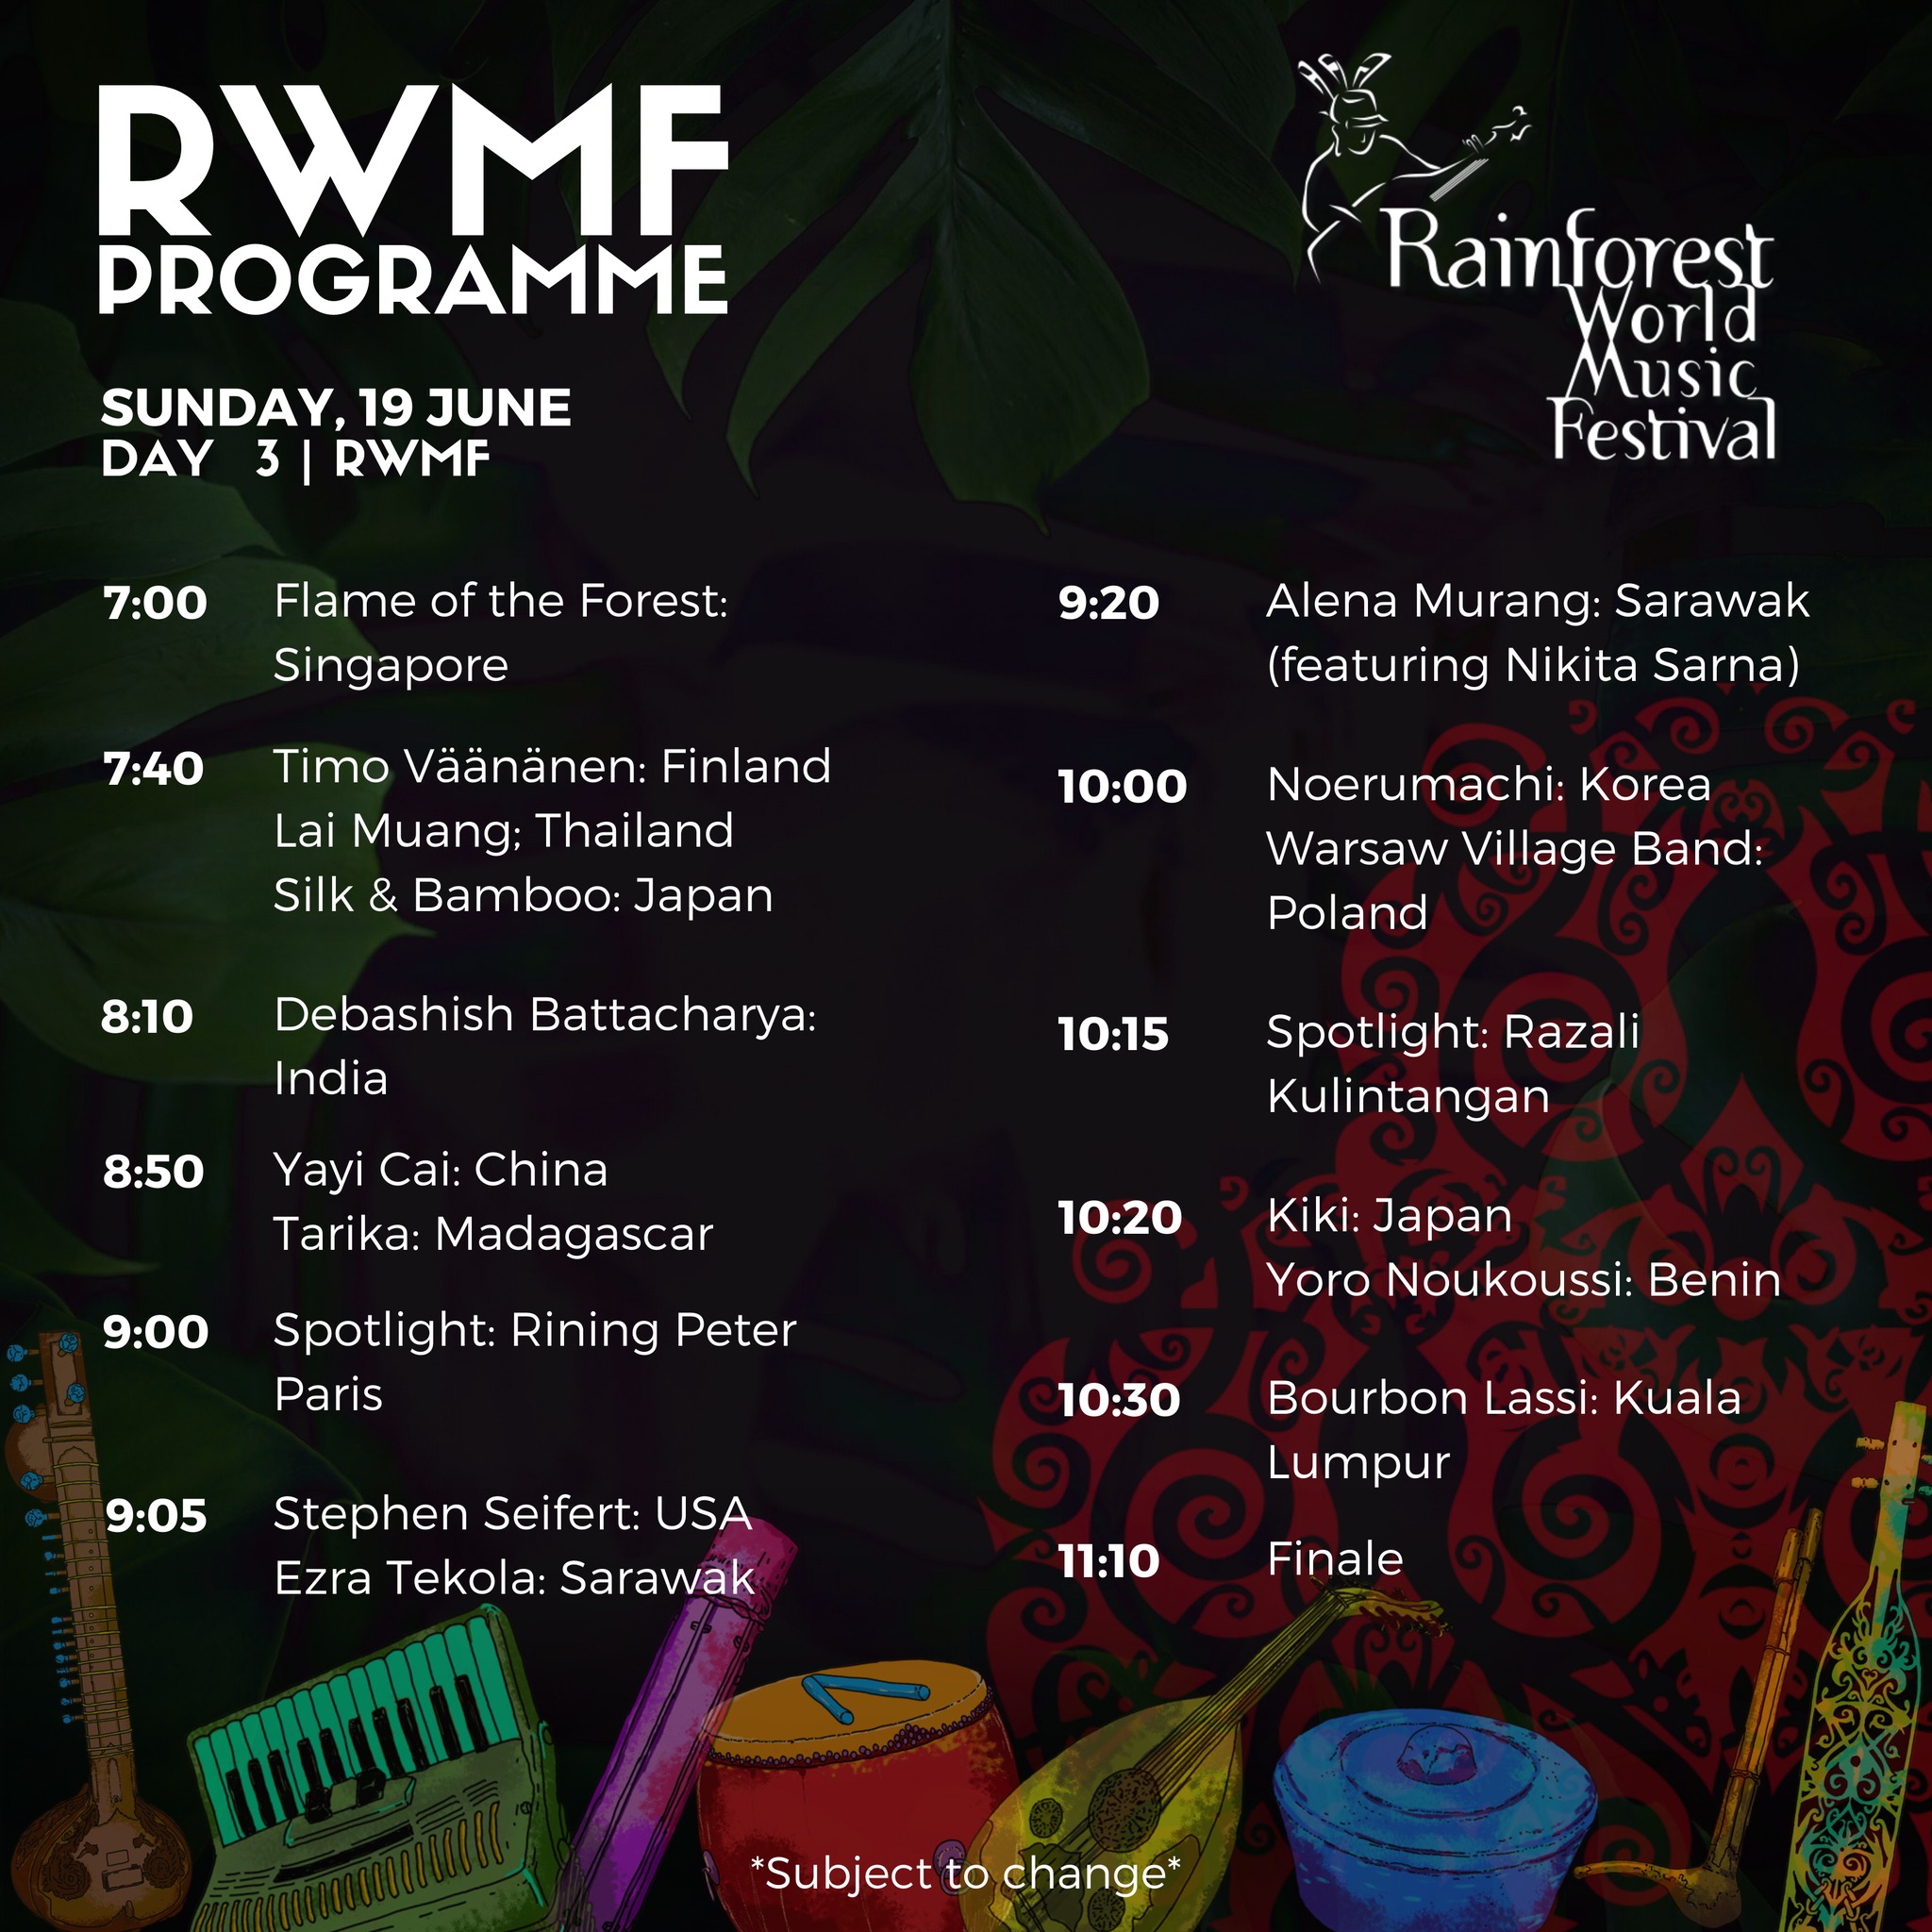 The Rainforest World Music Festival 2022 BRWMF DAY 3